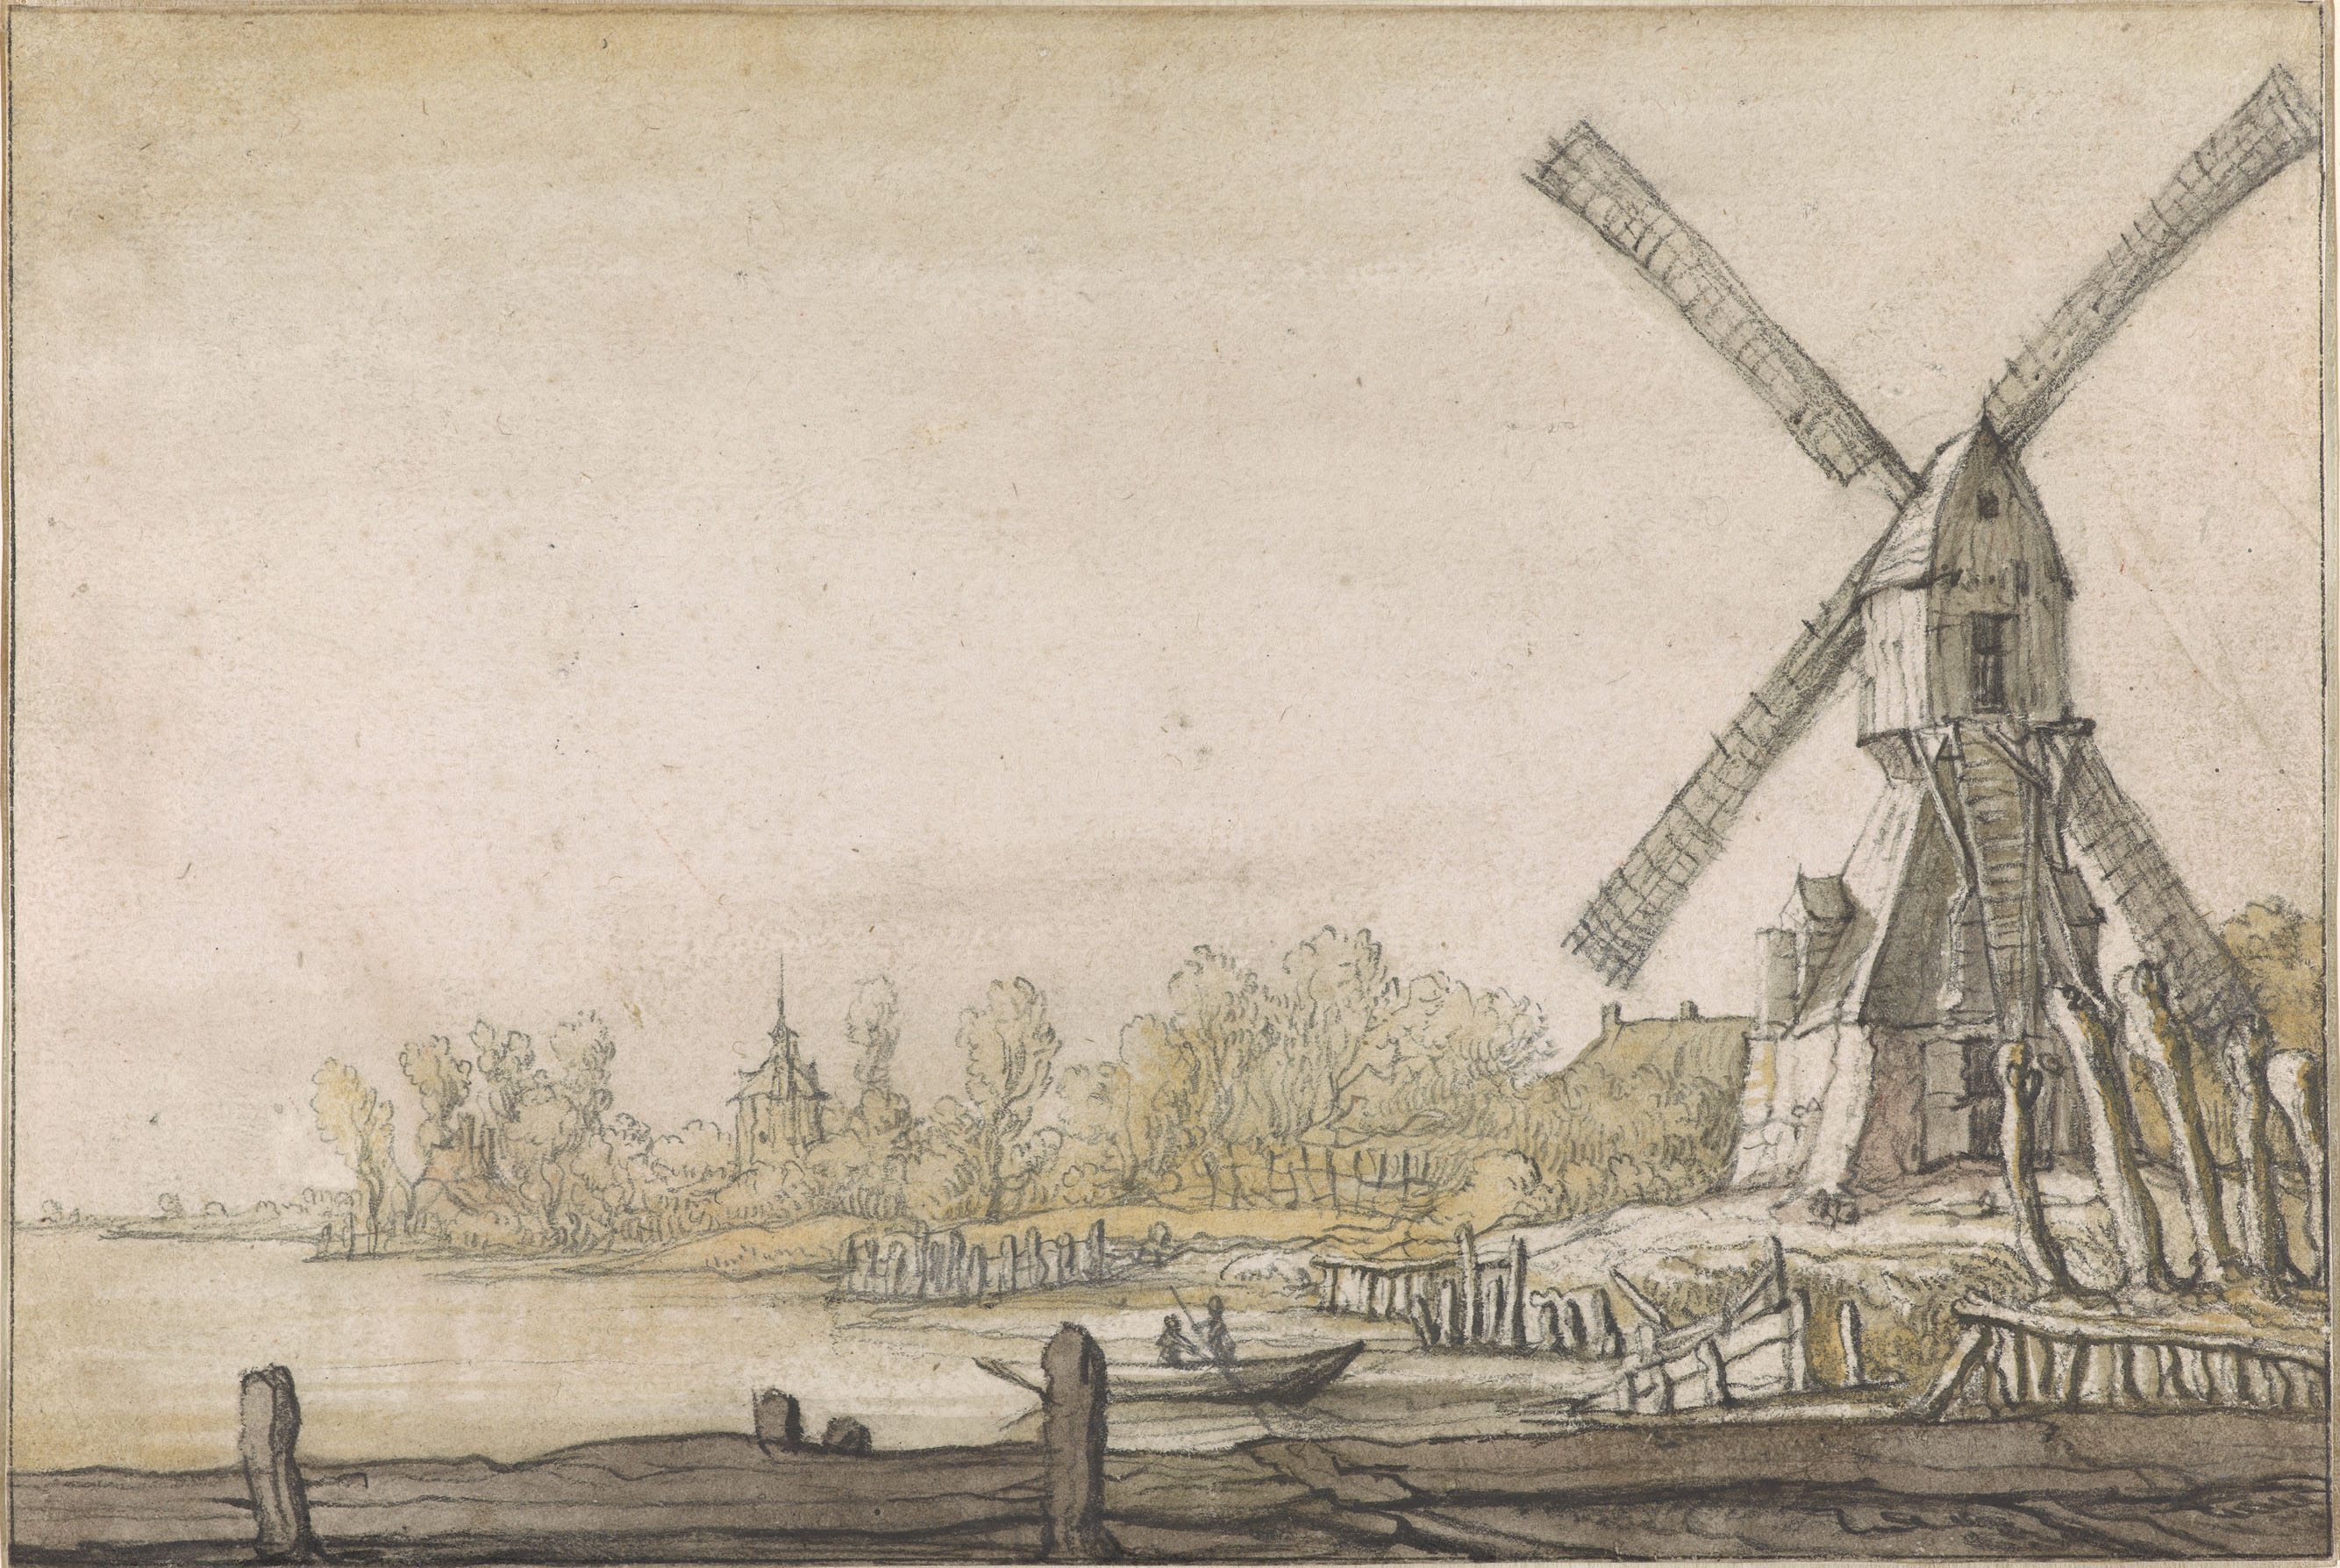 Dutch Windmill Drawing at GetDrawings Free download